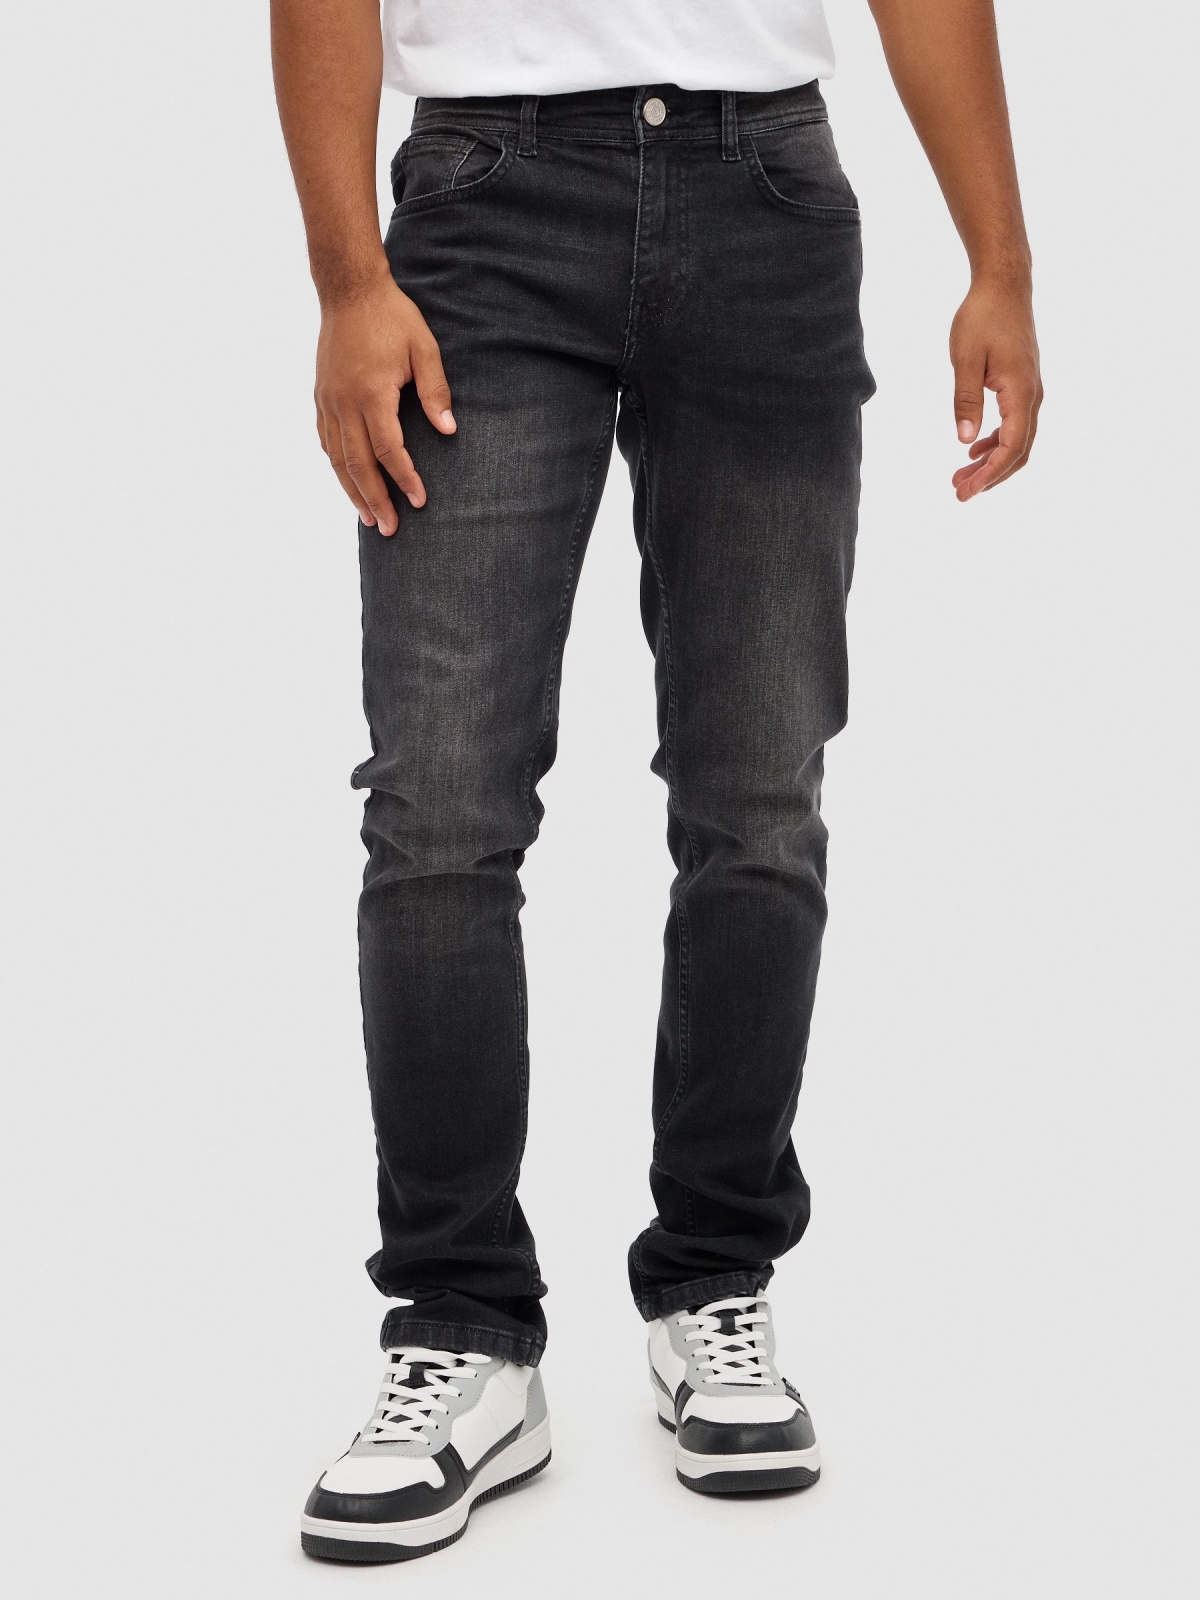 Jeans slim denim gris negro vista media frontal